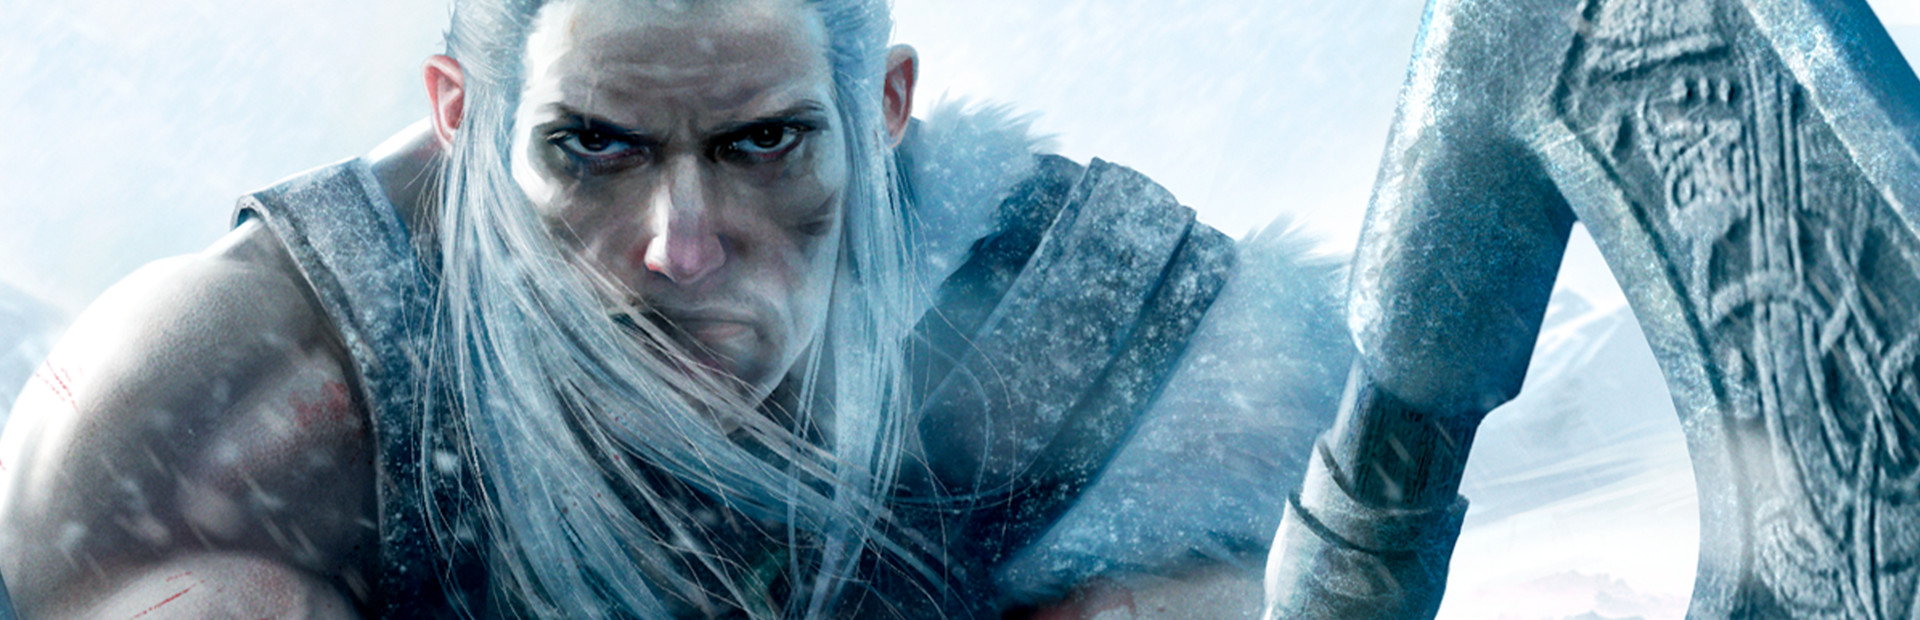 Viking: Battle for Asgard cover image